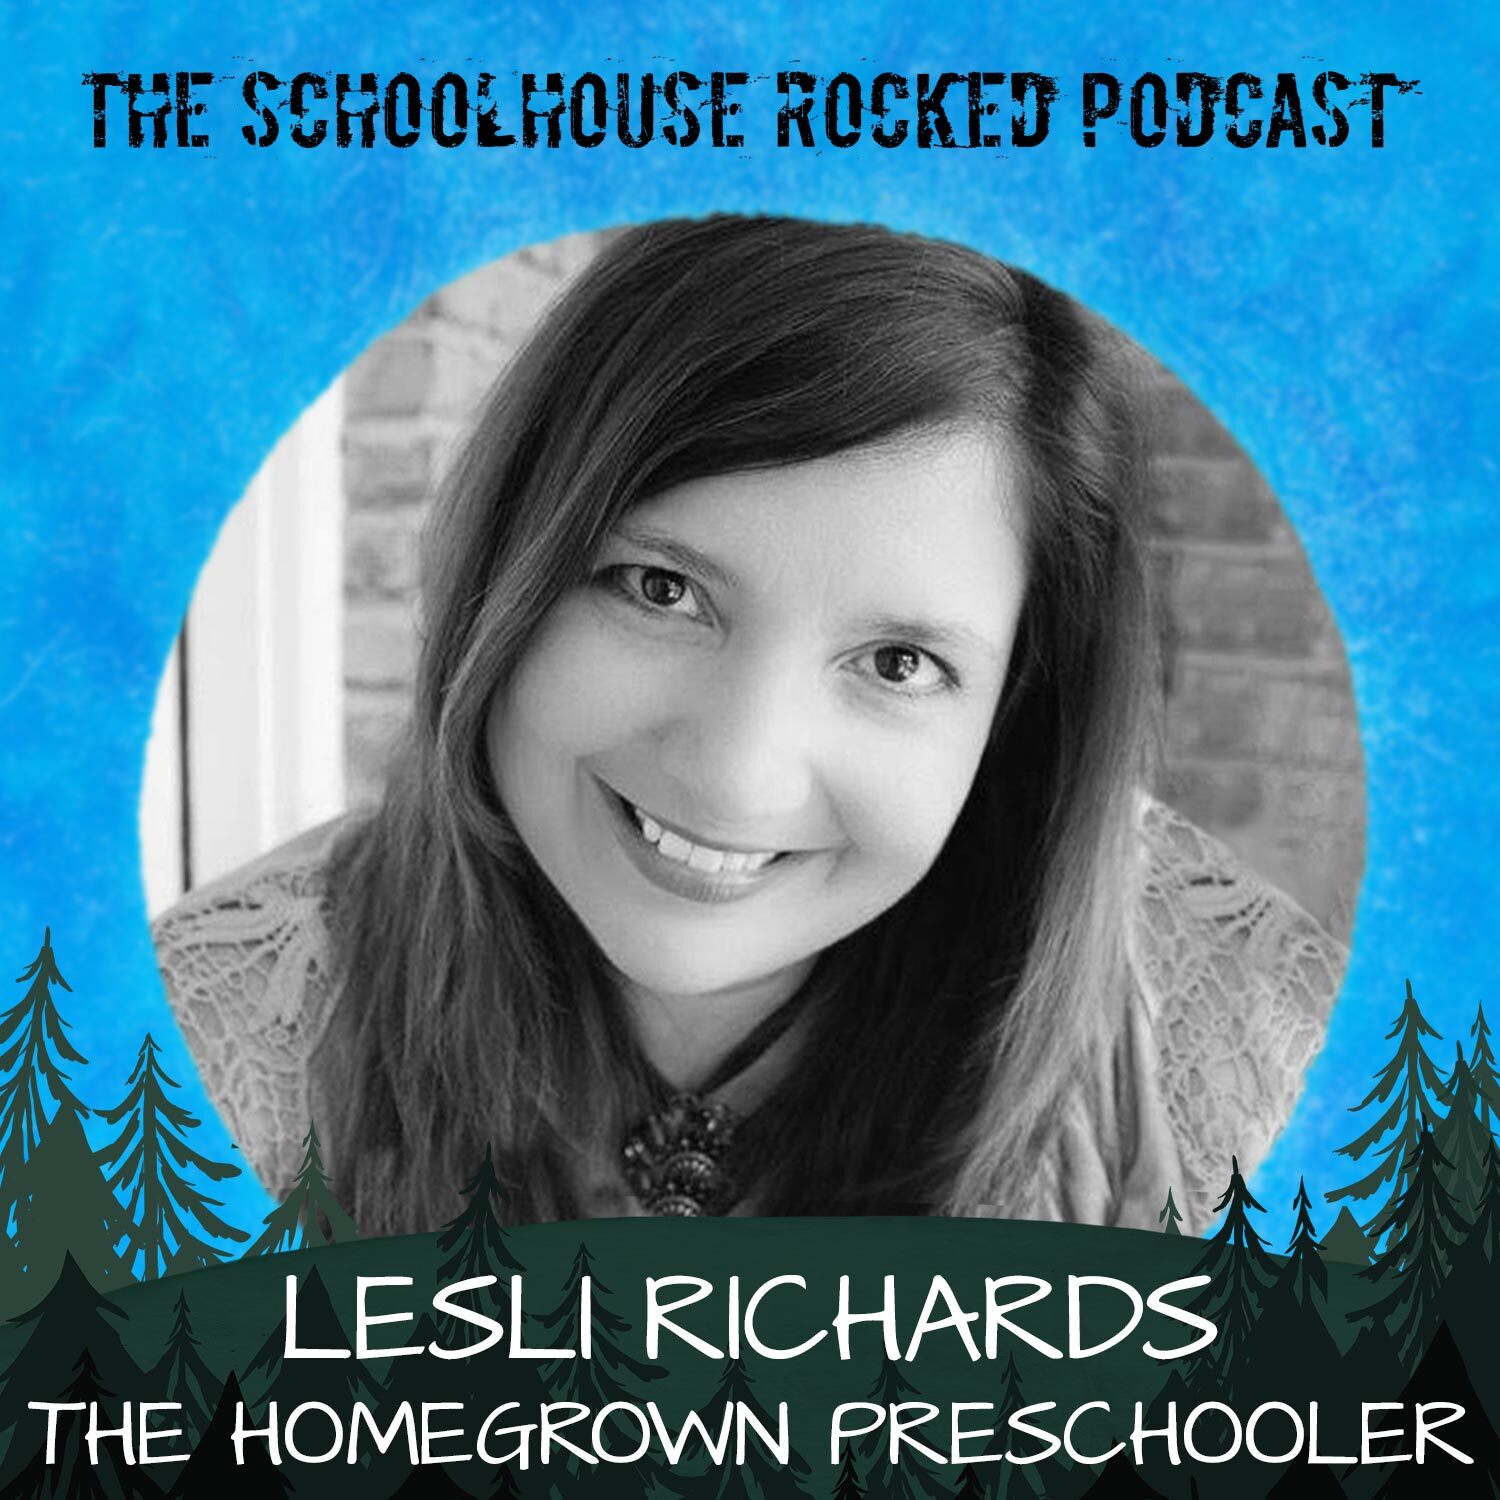 Lesli Richards - The Homegrown Preschooler